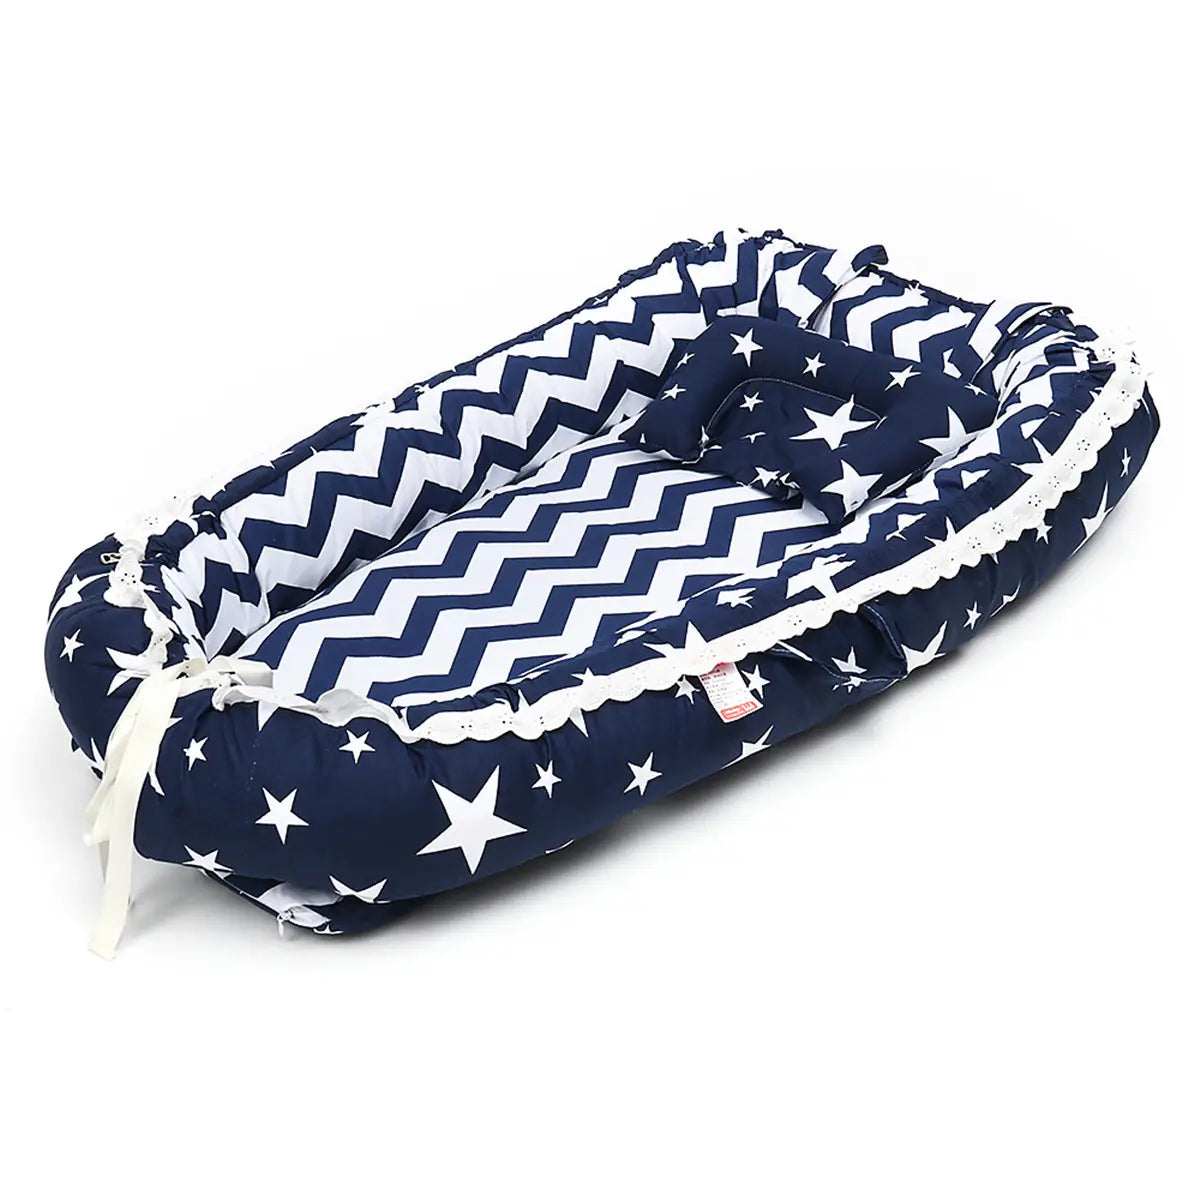 Portable Folding Bed Baby Pillow Sleep Cushion Cot Crib